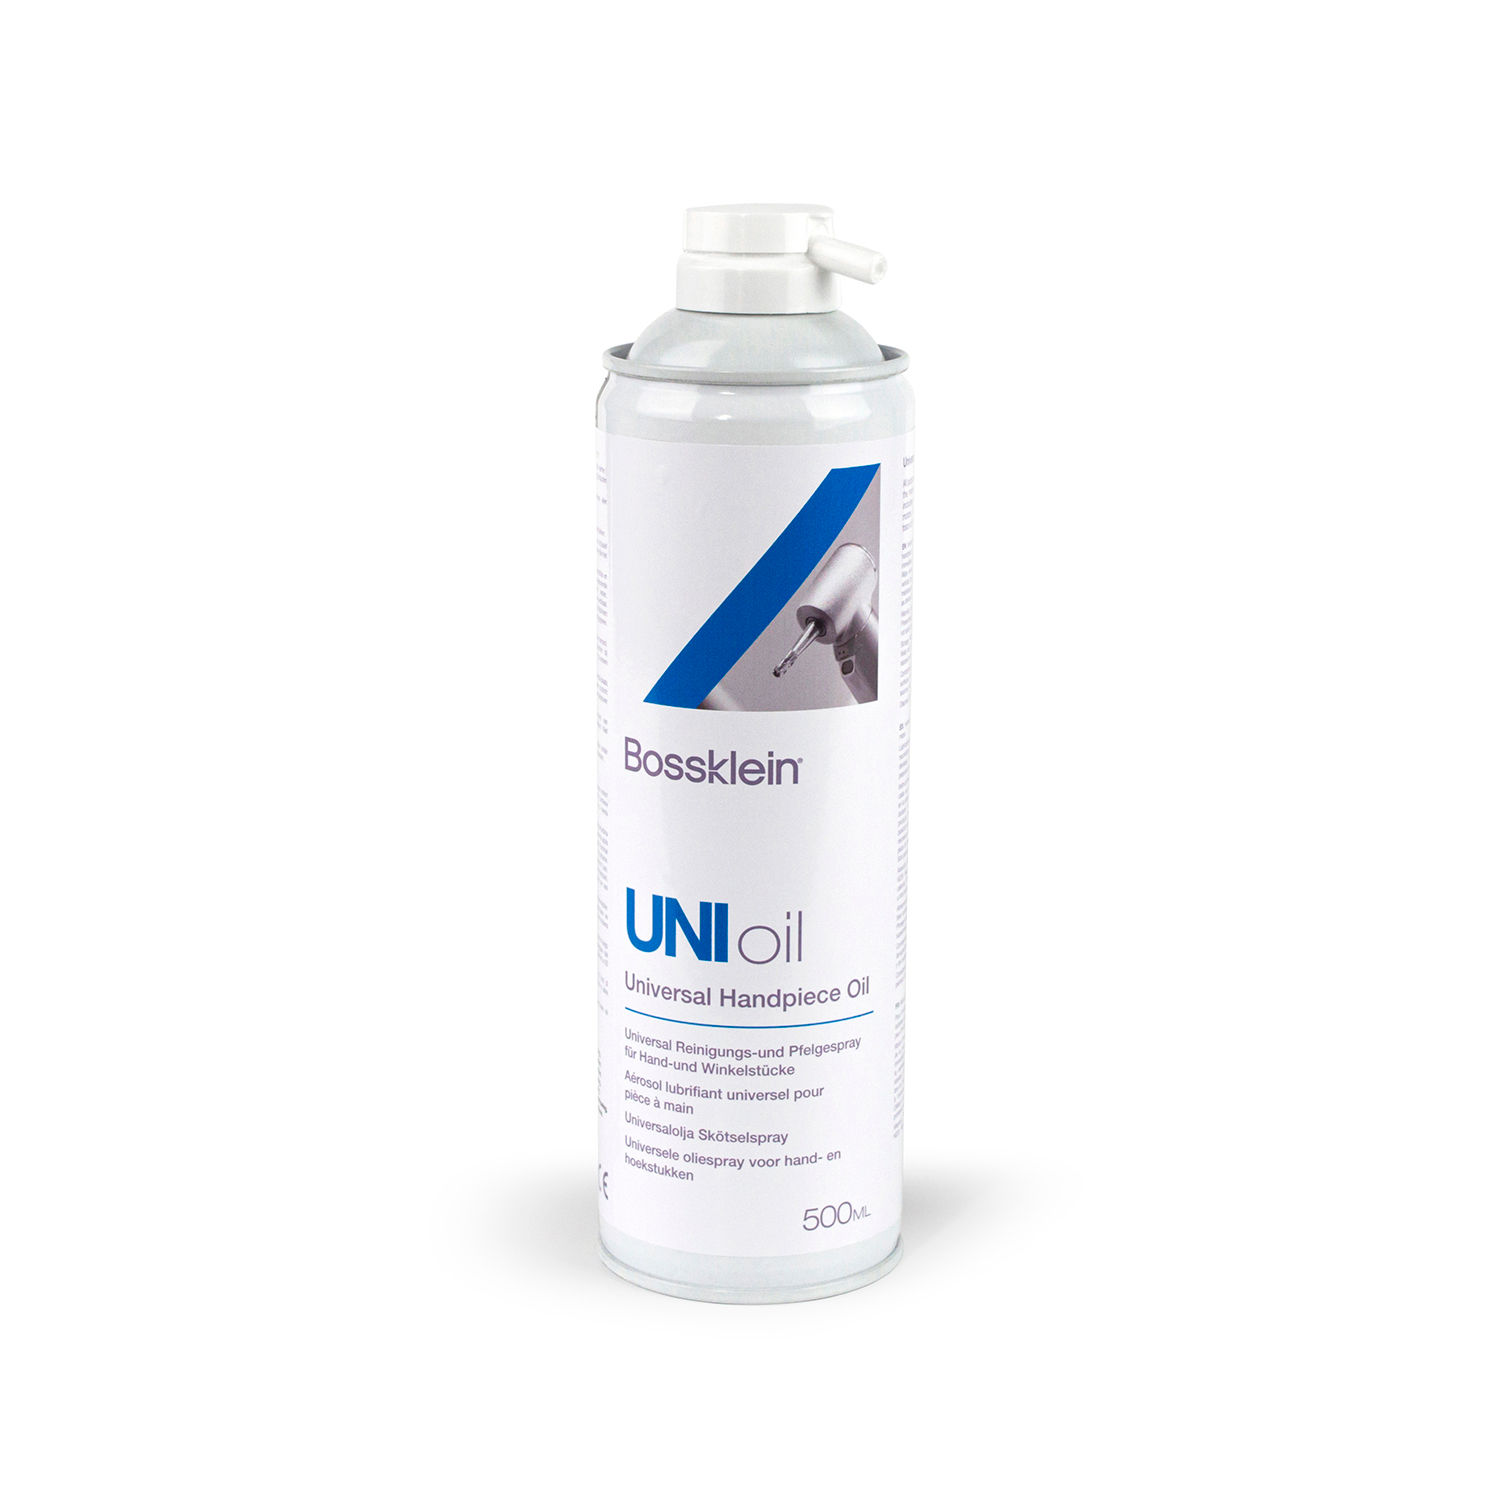 UNIoil Universal Handpiece Oil Spray - Bossklein - Hygiene & Disinfection  Products